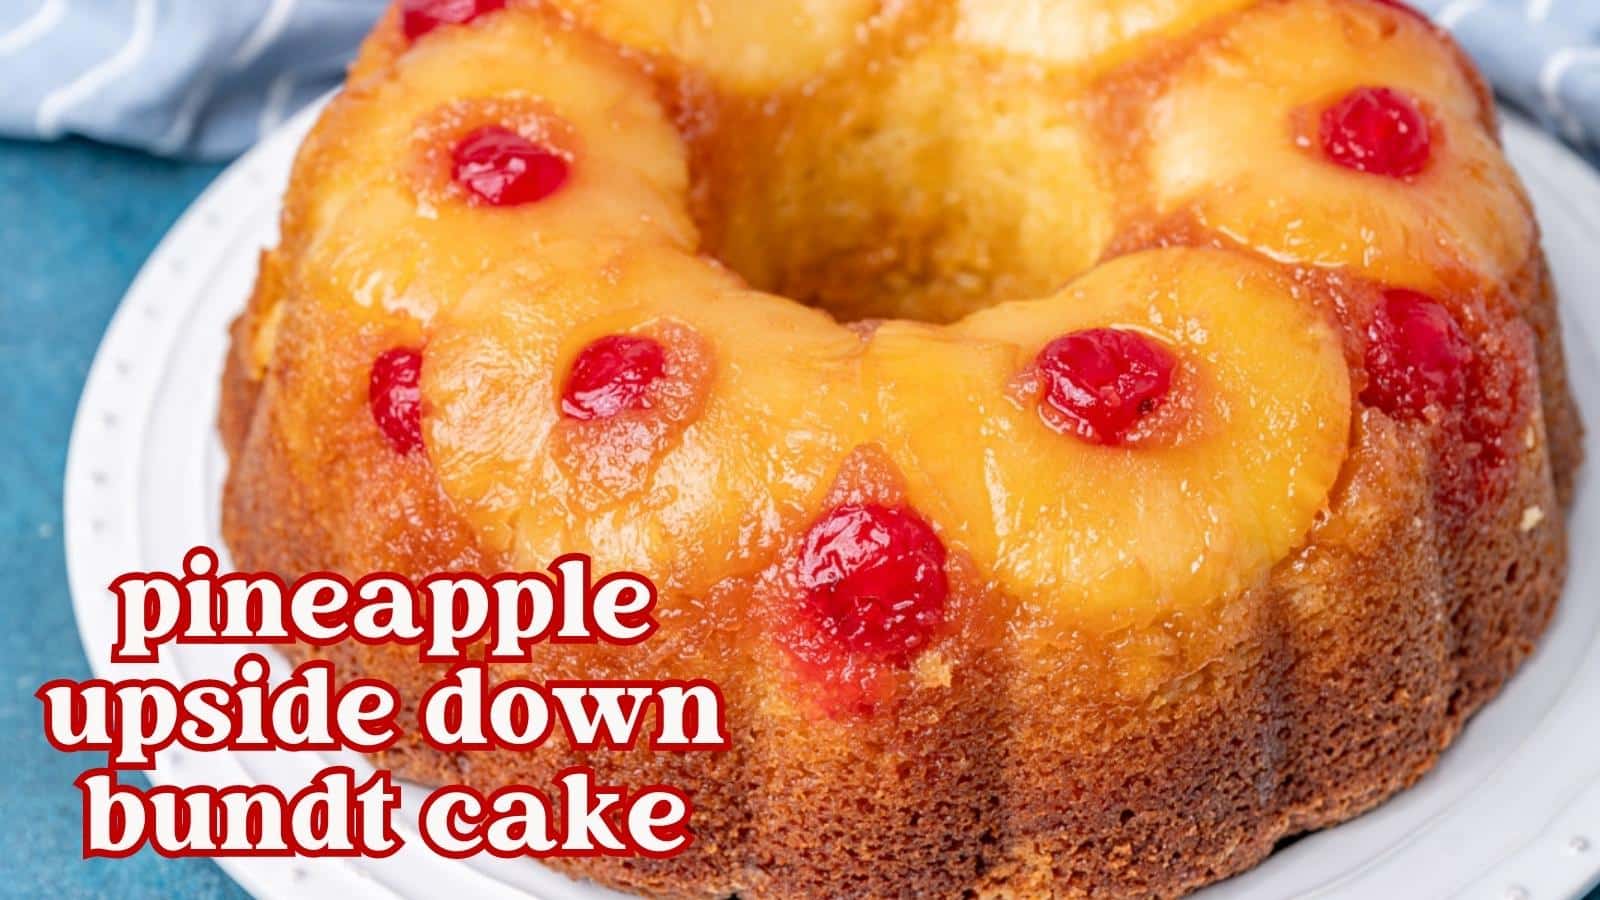 Best Pineapple Upside Down Bundt Cake Recipe - How to Make